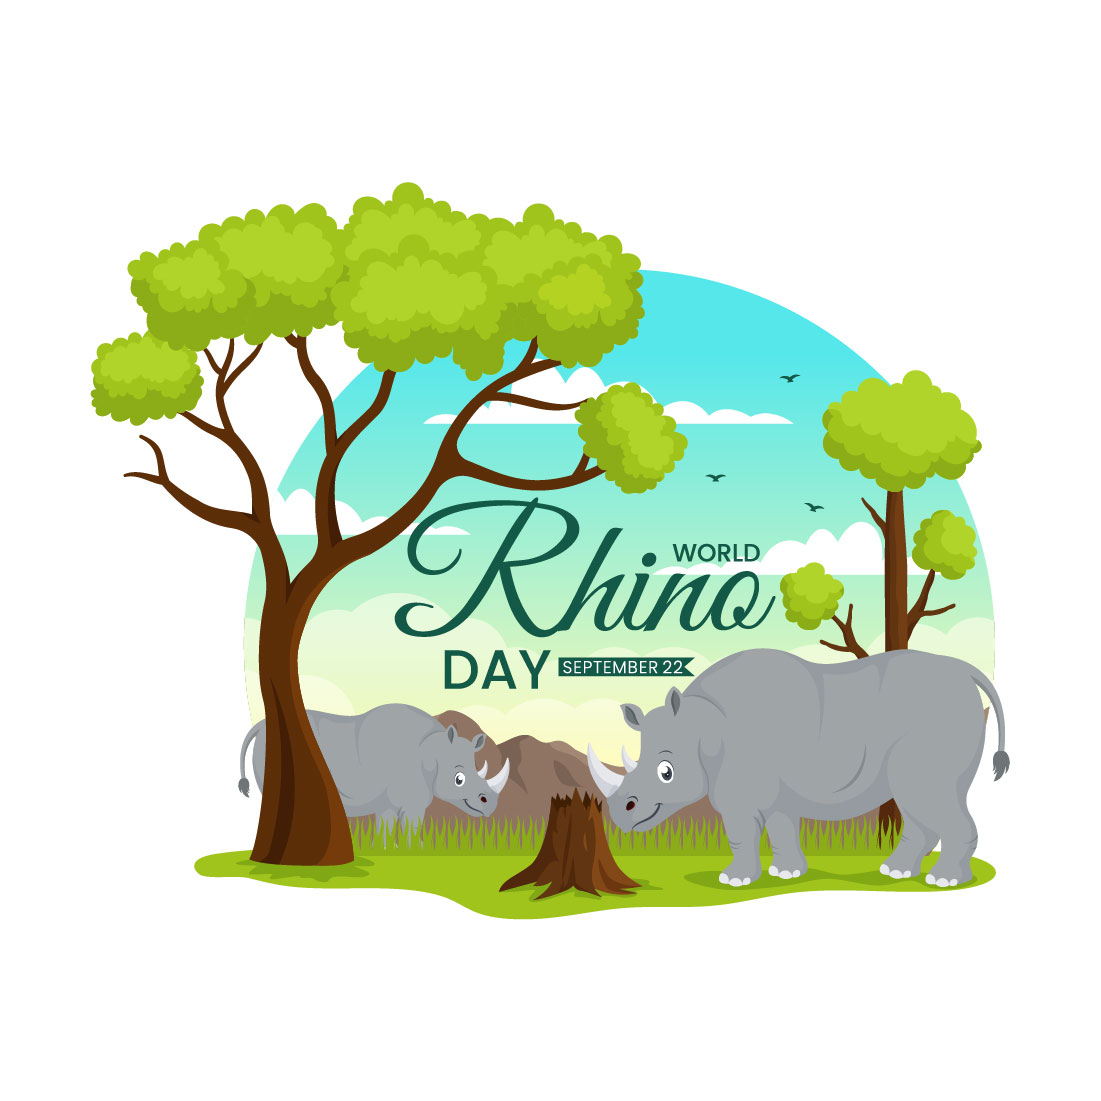 13 World Rhino Day Vector Illustration cover image.